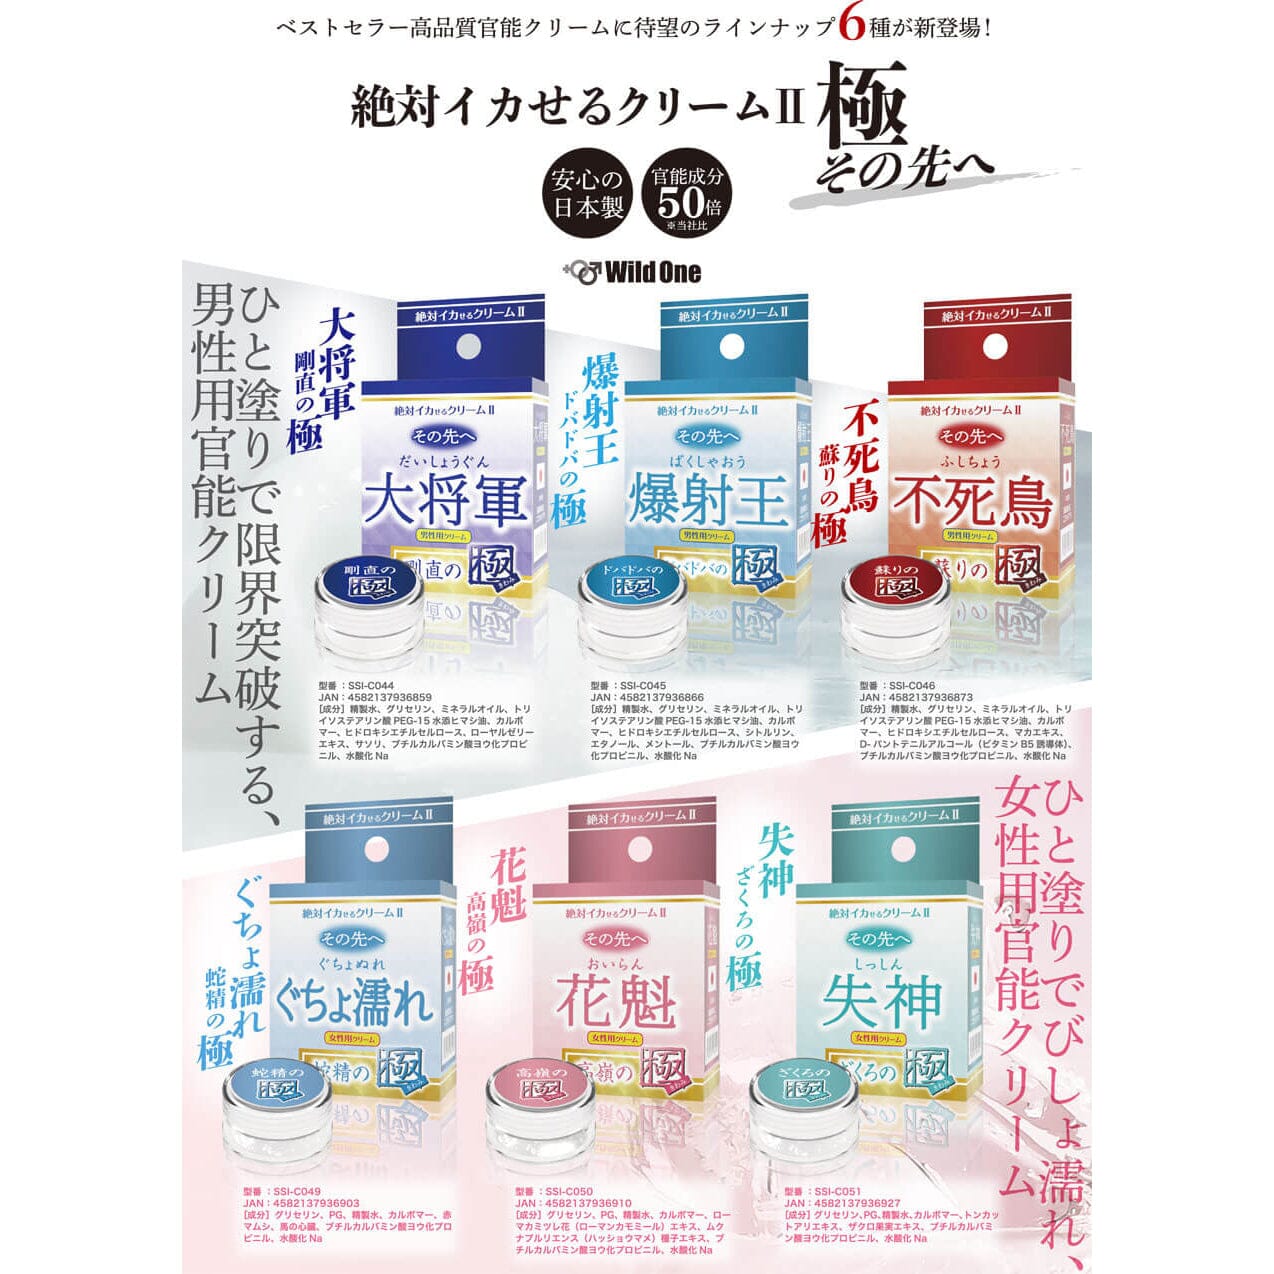 SSI JAPAN 【女性用】絕對潮吹軟膏 第 2 代 花魁 高嶺の極 購買